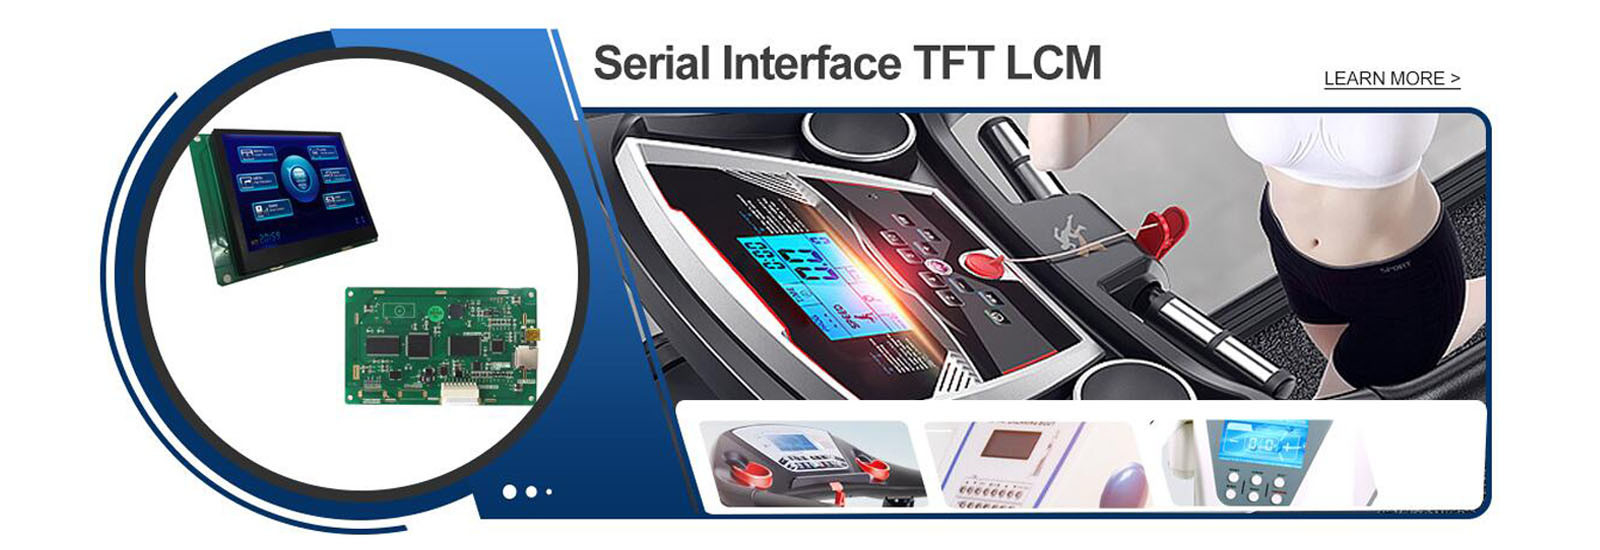 качество Модуль экрана TFT LCD завод